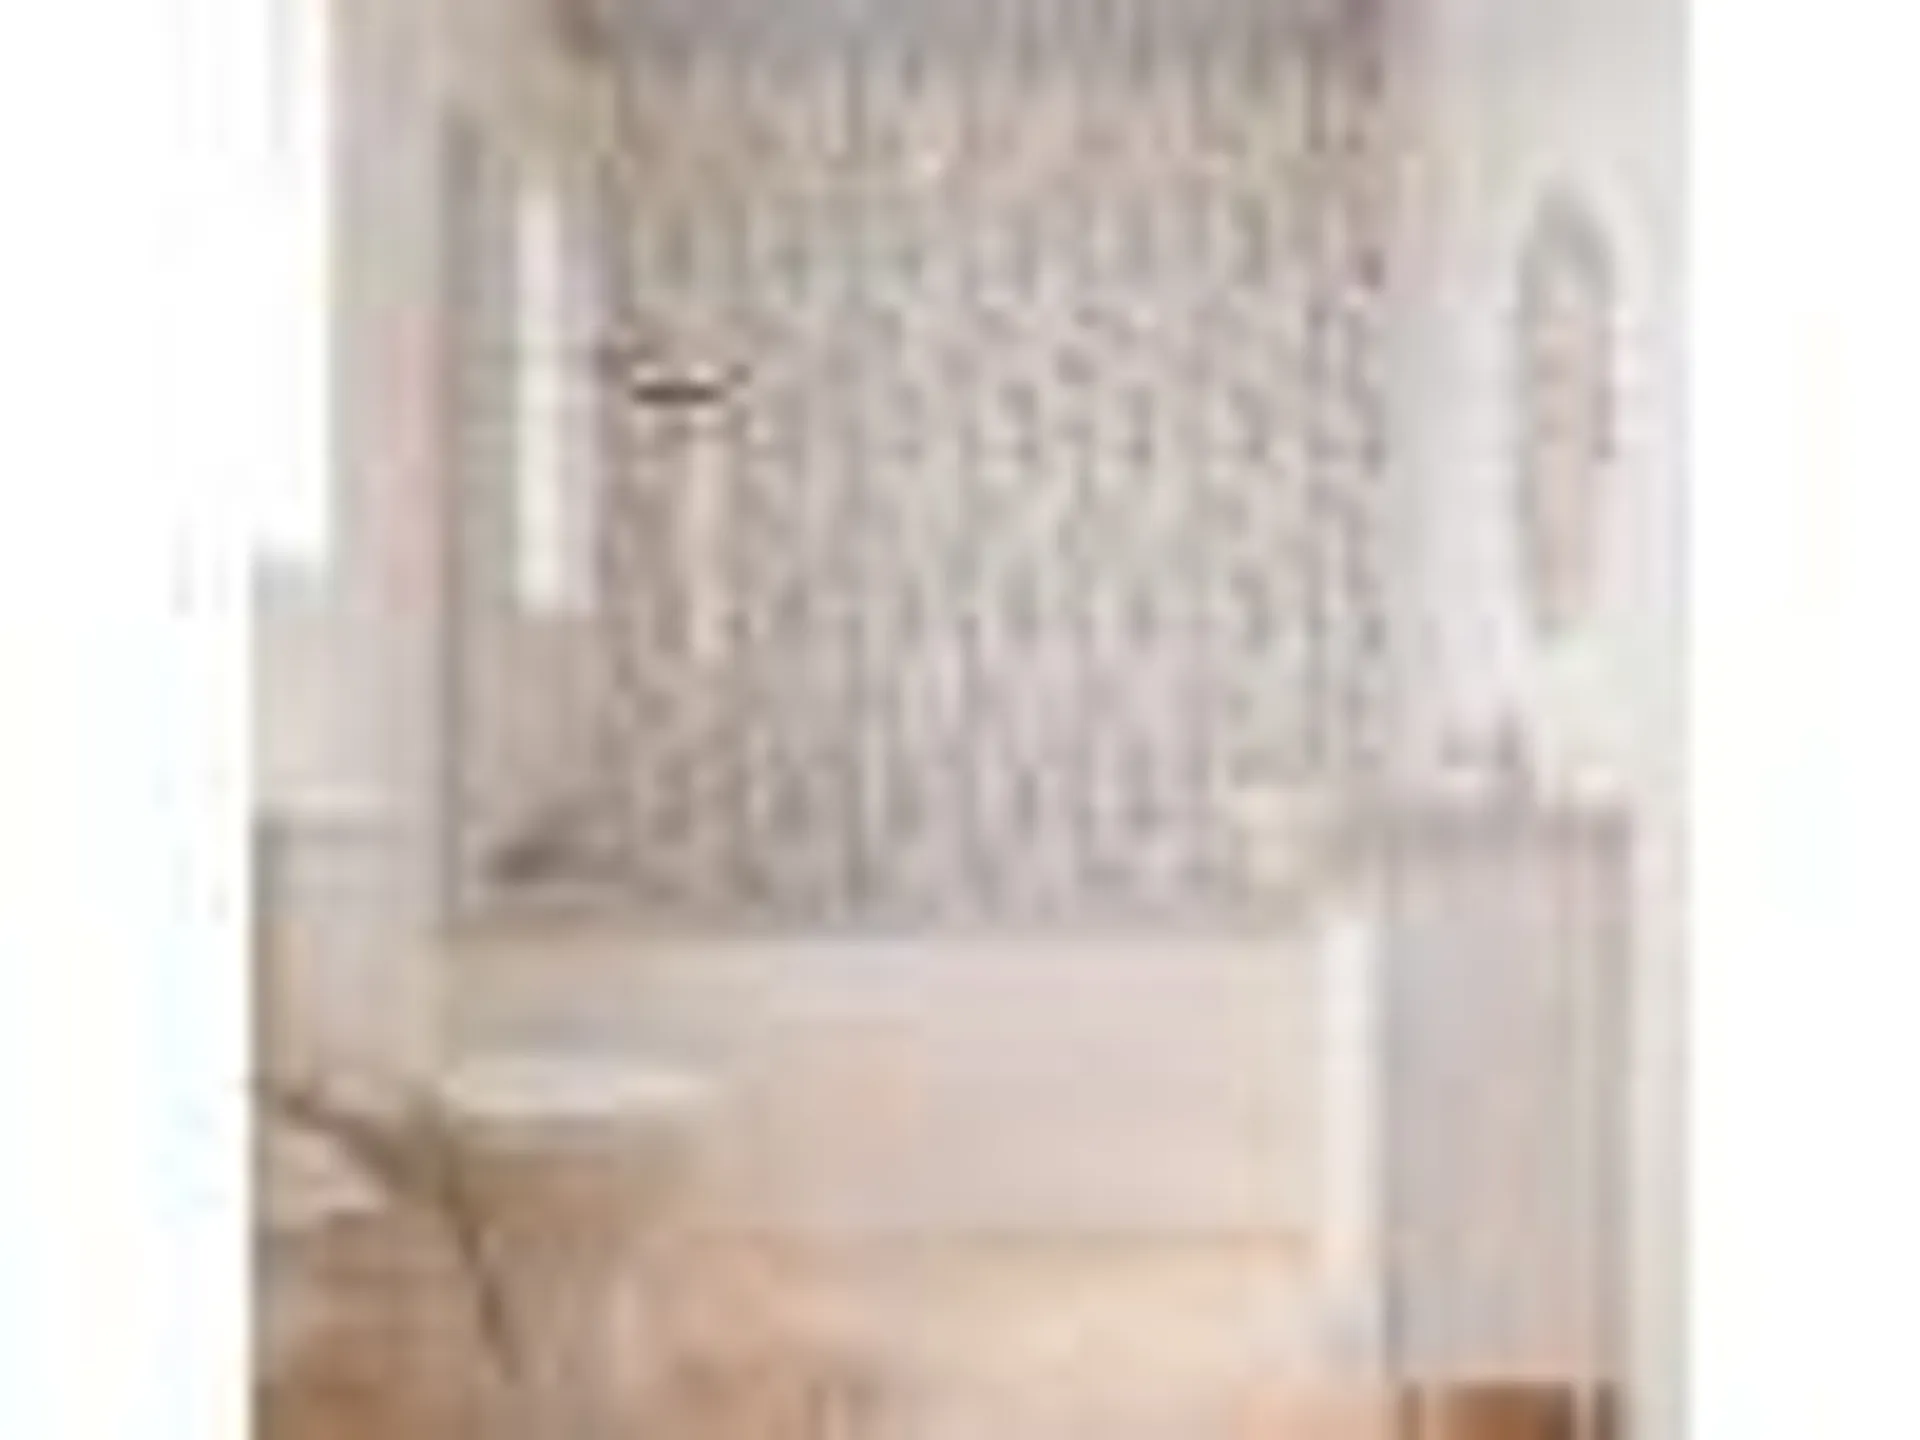 Samir Ivory Shiny Ceramic Wall Tile 250mm x 400mm A-Grade